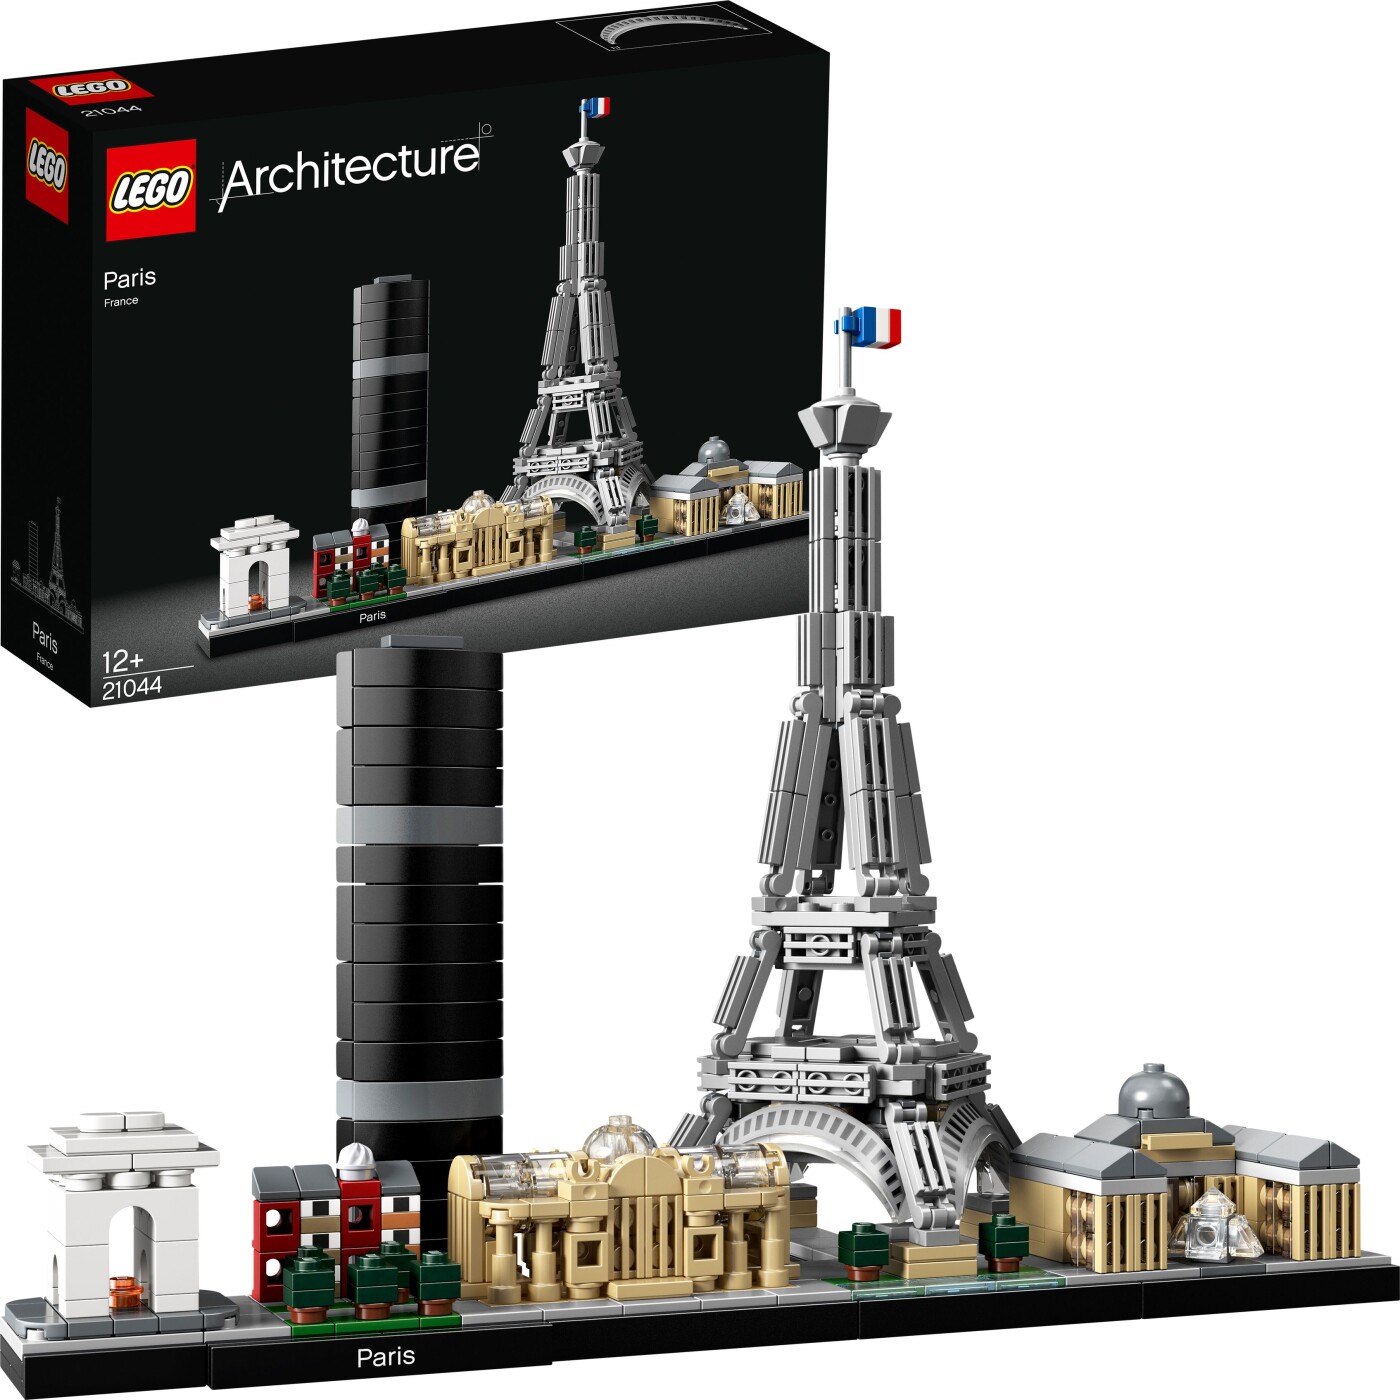 Lego - Paris Med Eiffeltårnet - 21044 399.95 • Toy Factory